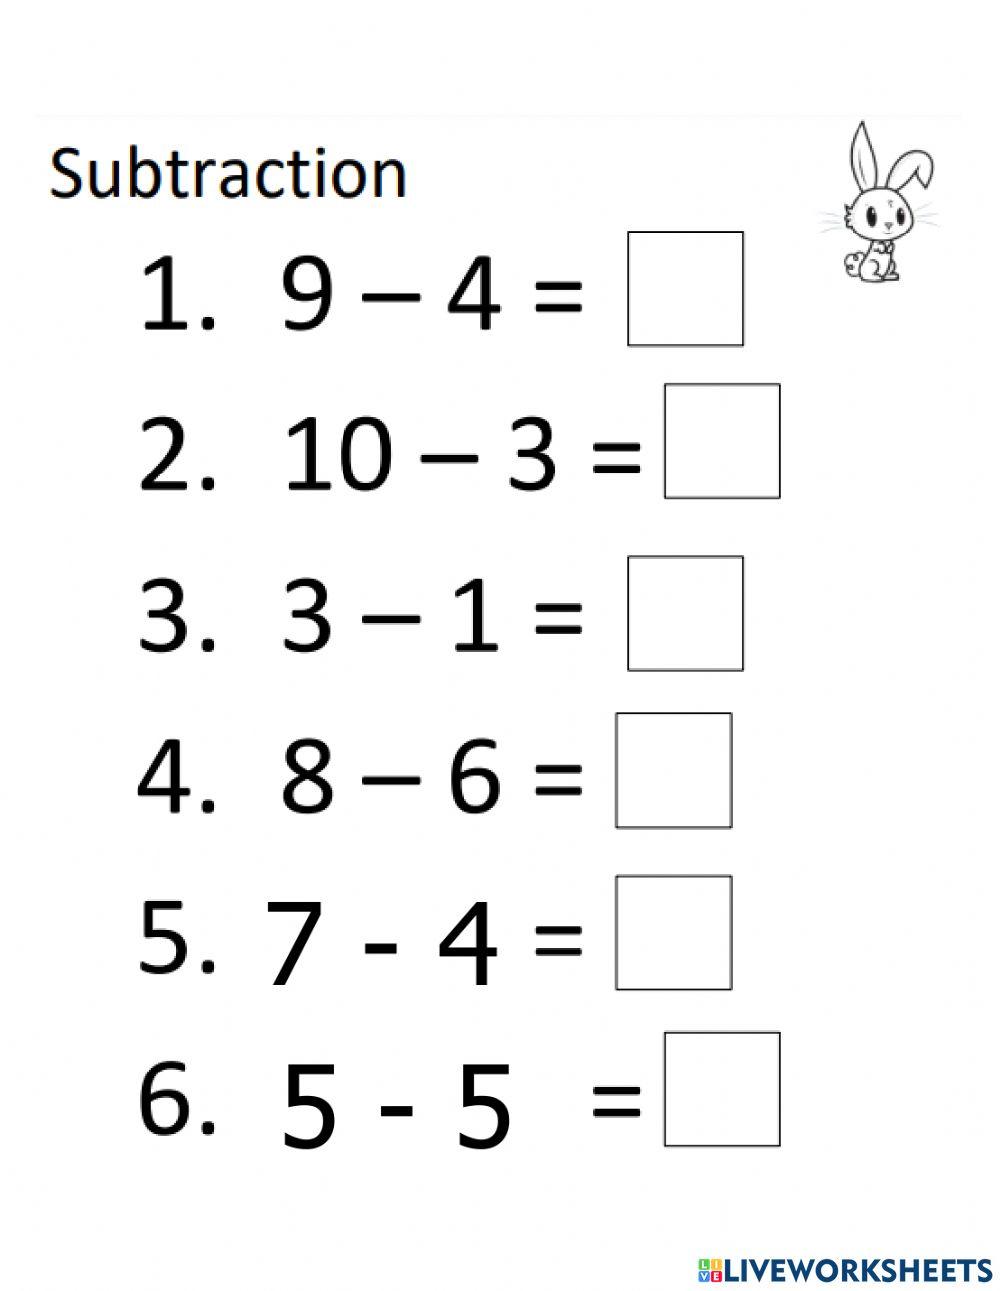 Subtractions